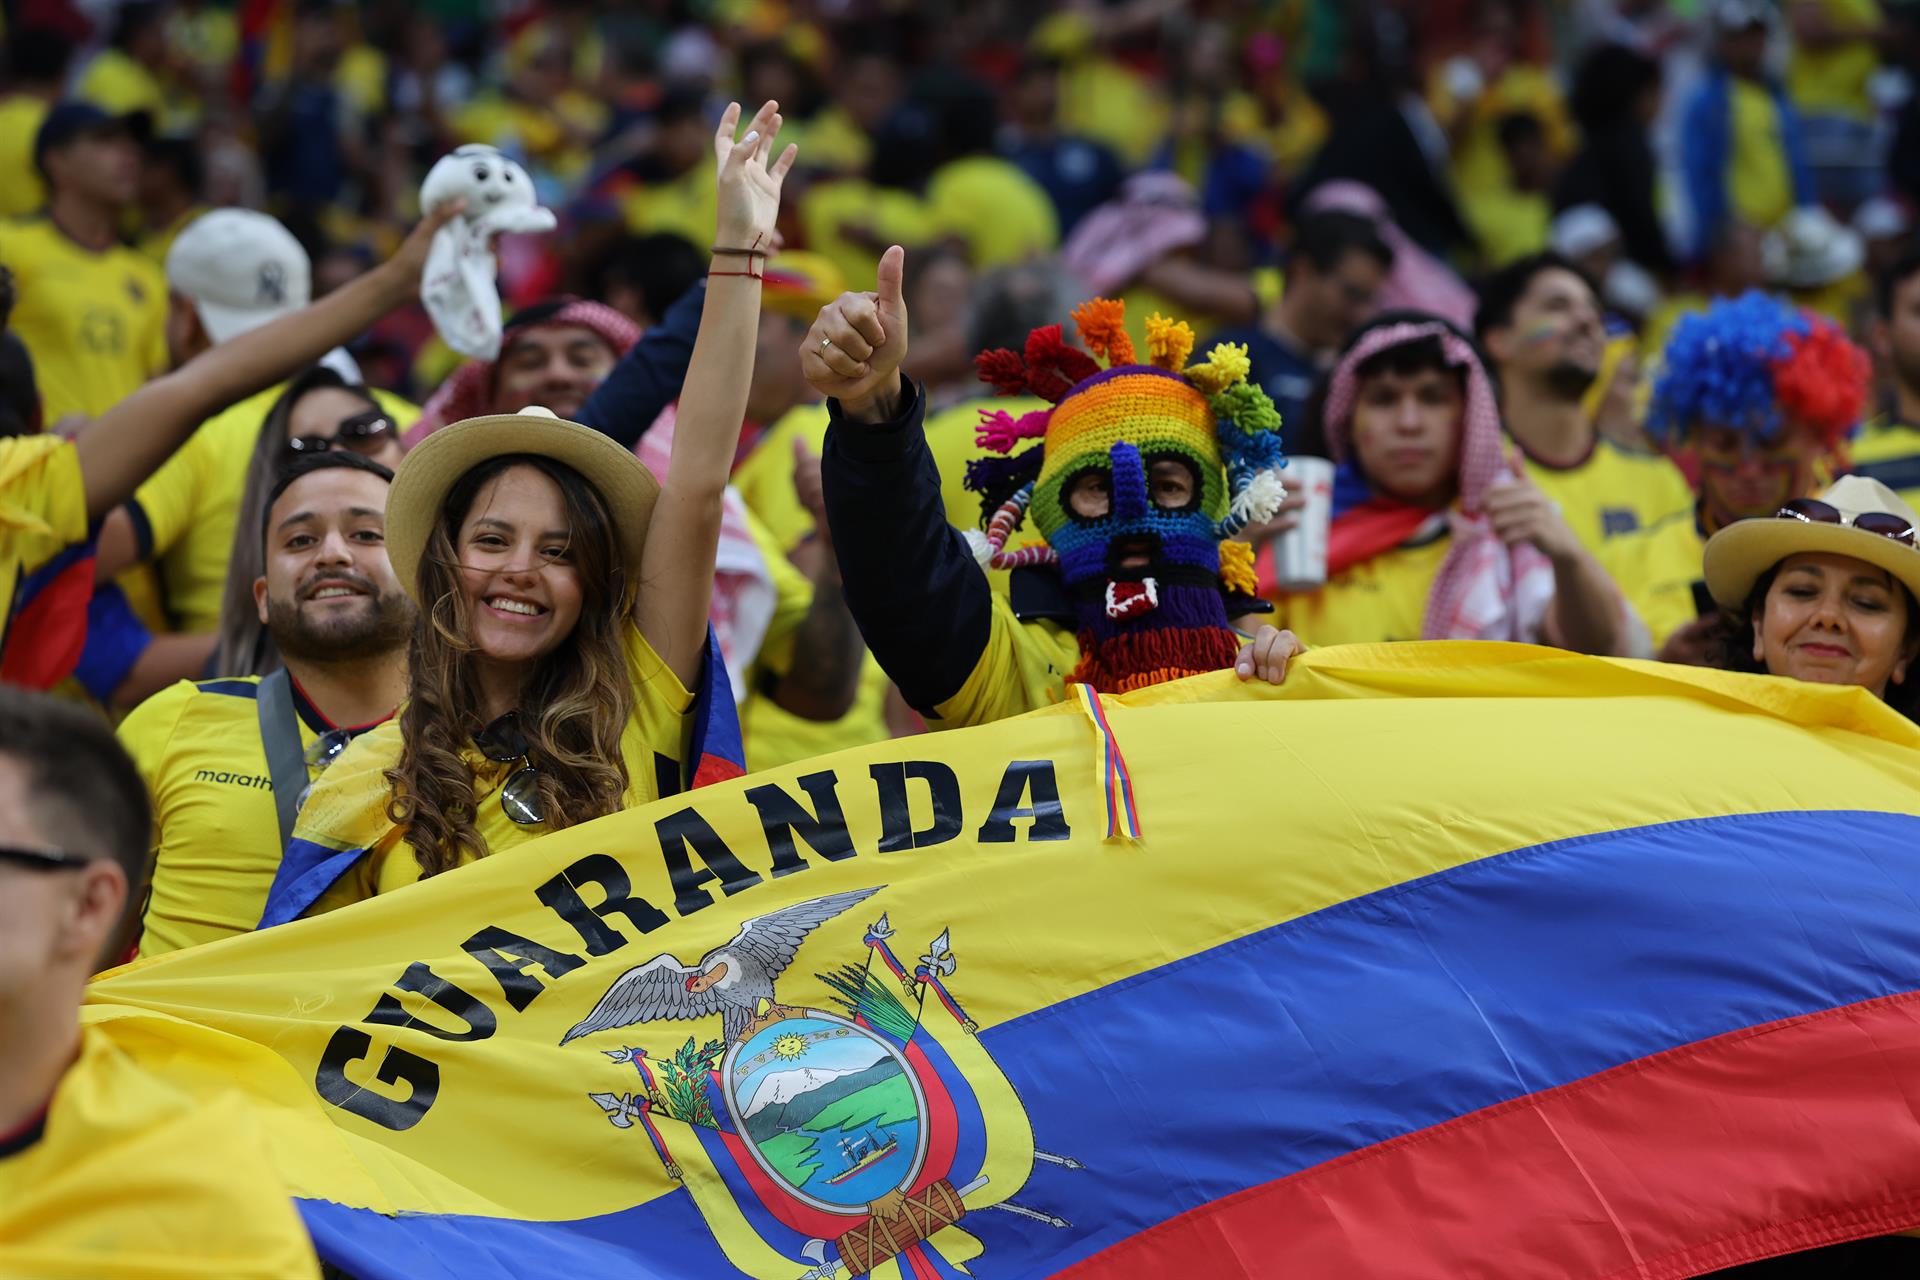 Ecuador vs. Qatar Mundial de fútbol en vivo